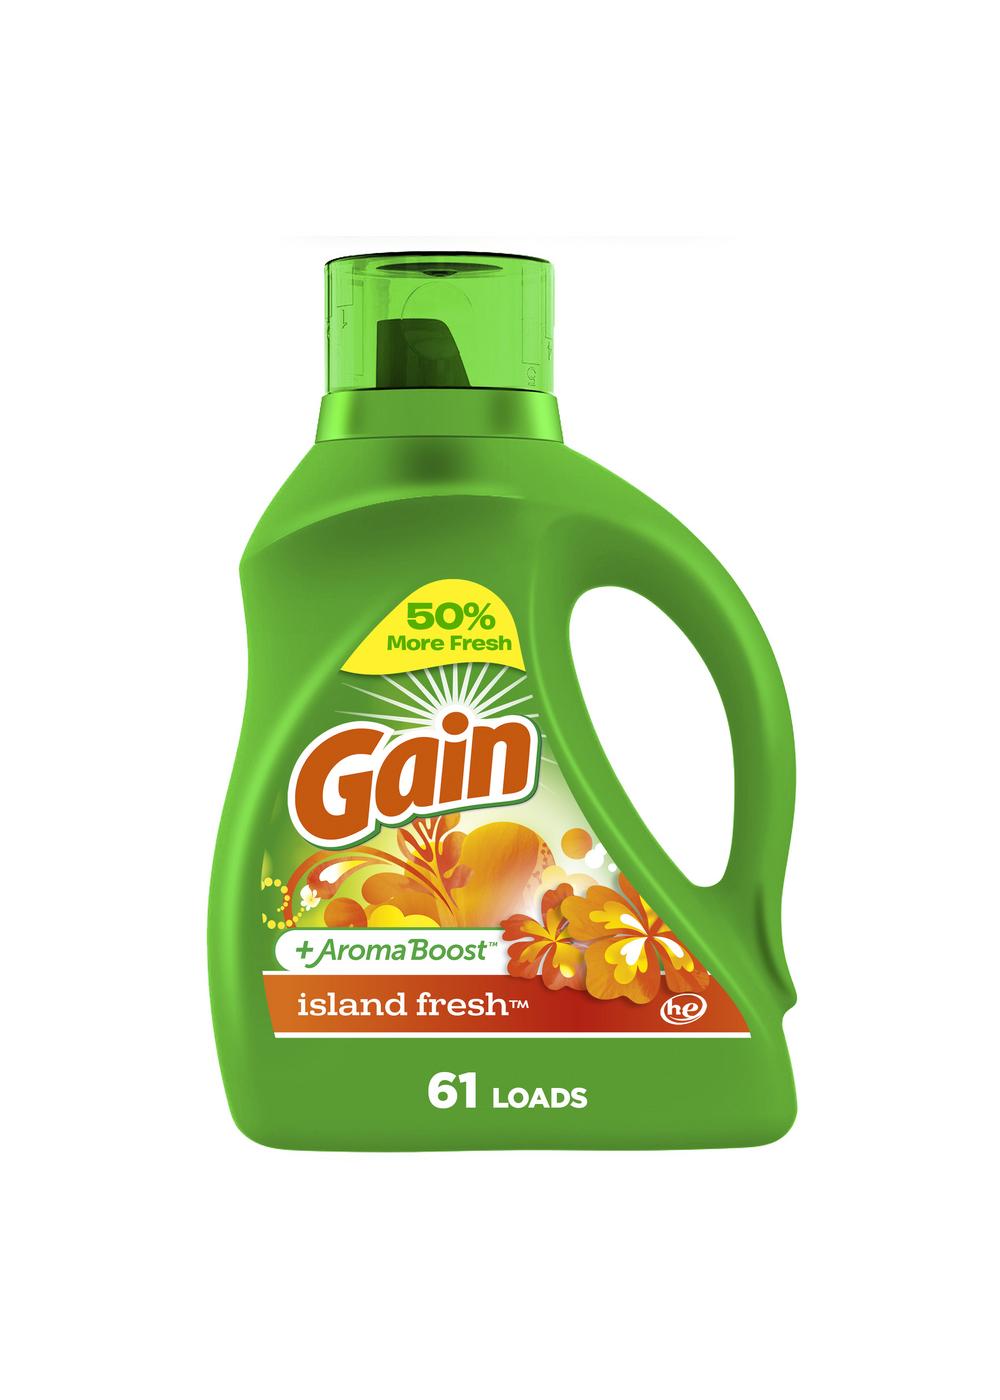 Gain + Aroma Boost HE Liquid Laundry Detergent, 61 Loads - Island Fresh; image 1 of 8